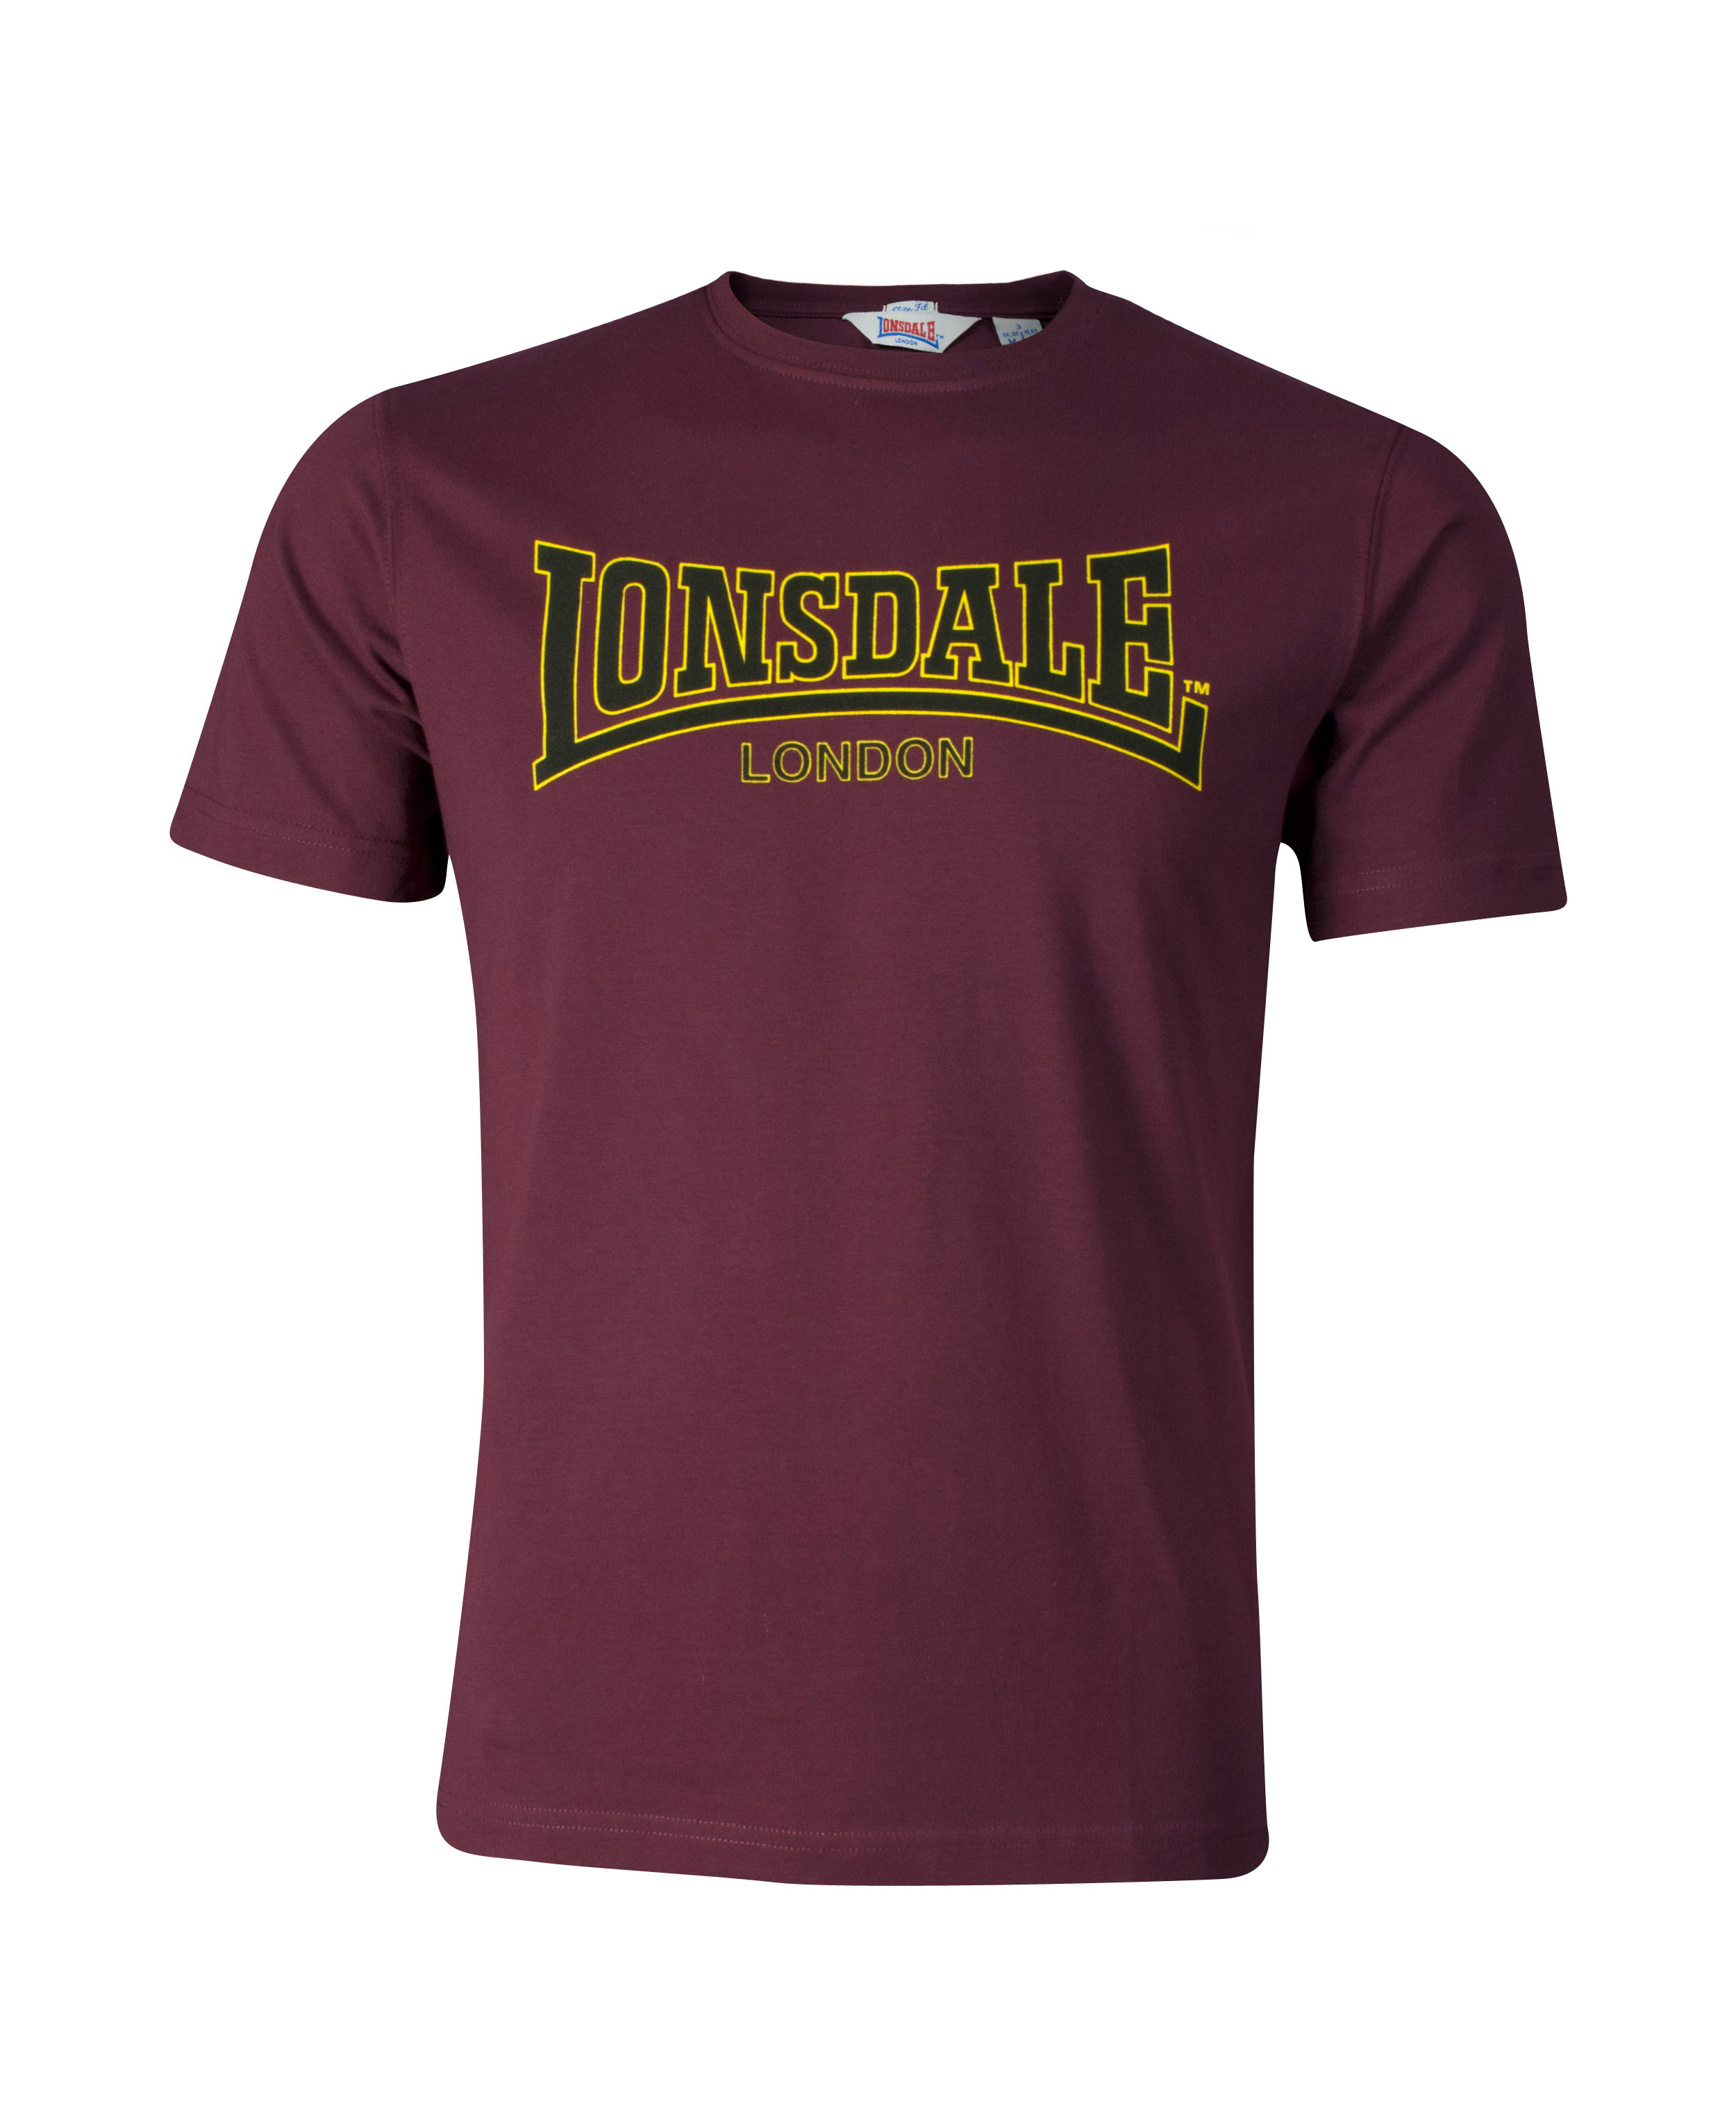 
T-shirt Lonsdale London Classic Bordowa
